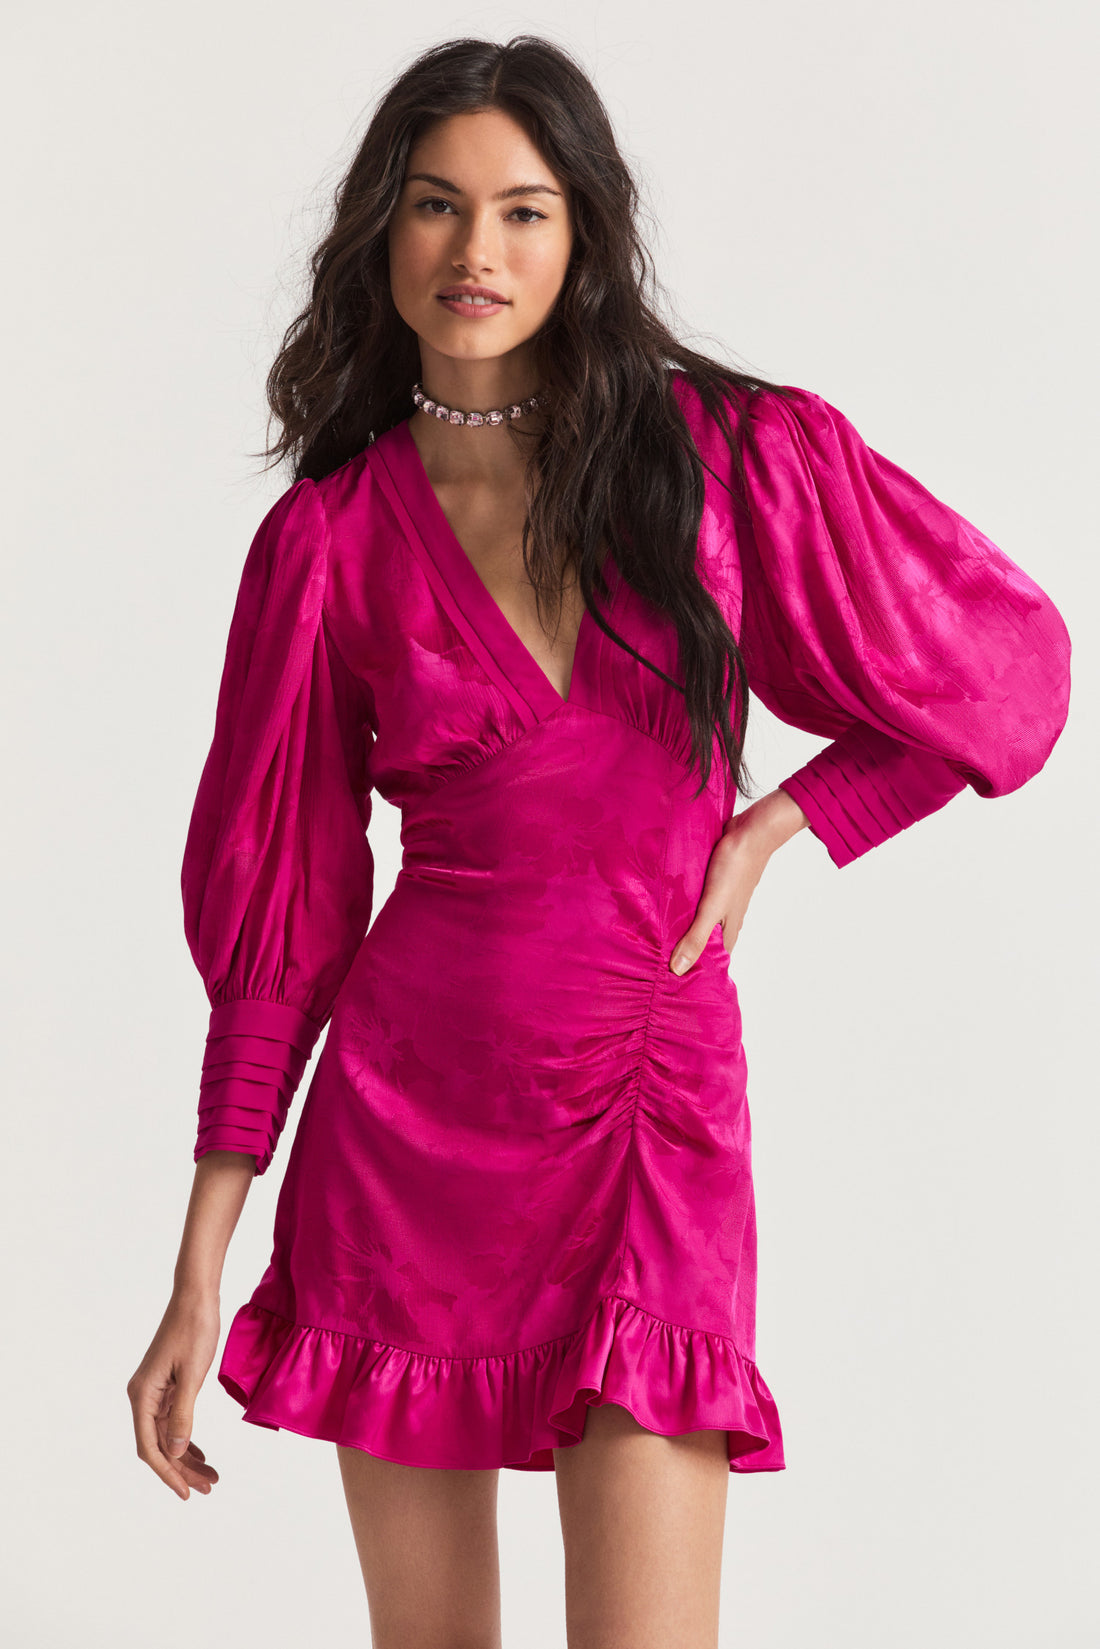 Revaline Mini Dress - Women's Dresses | Shop LoveShackFancy.com